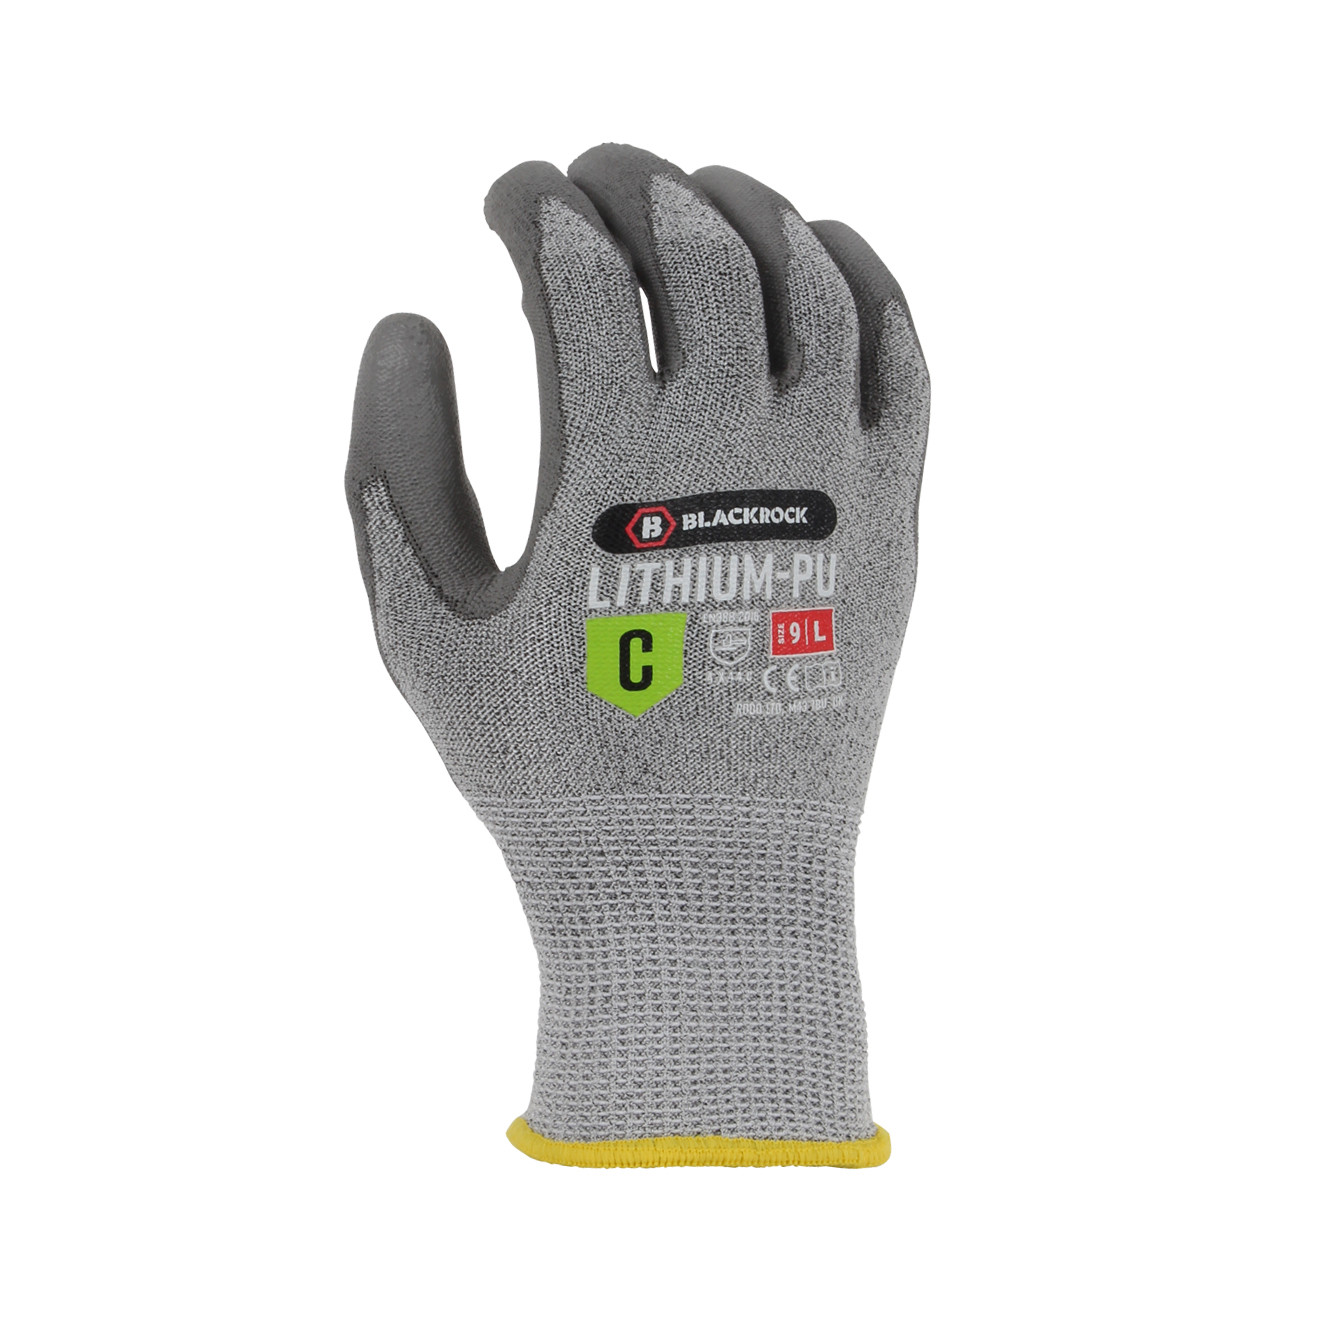 Lithium-PU Cut Resistant Glove